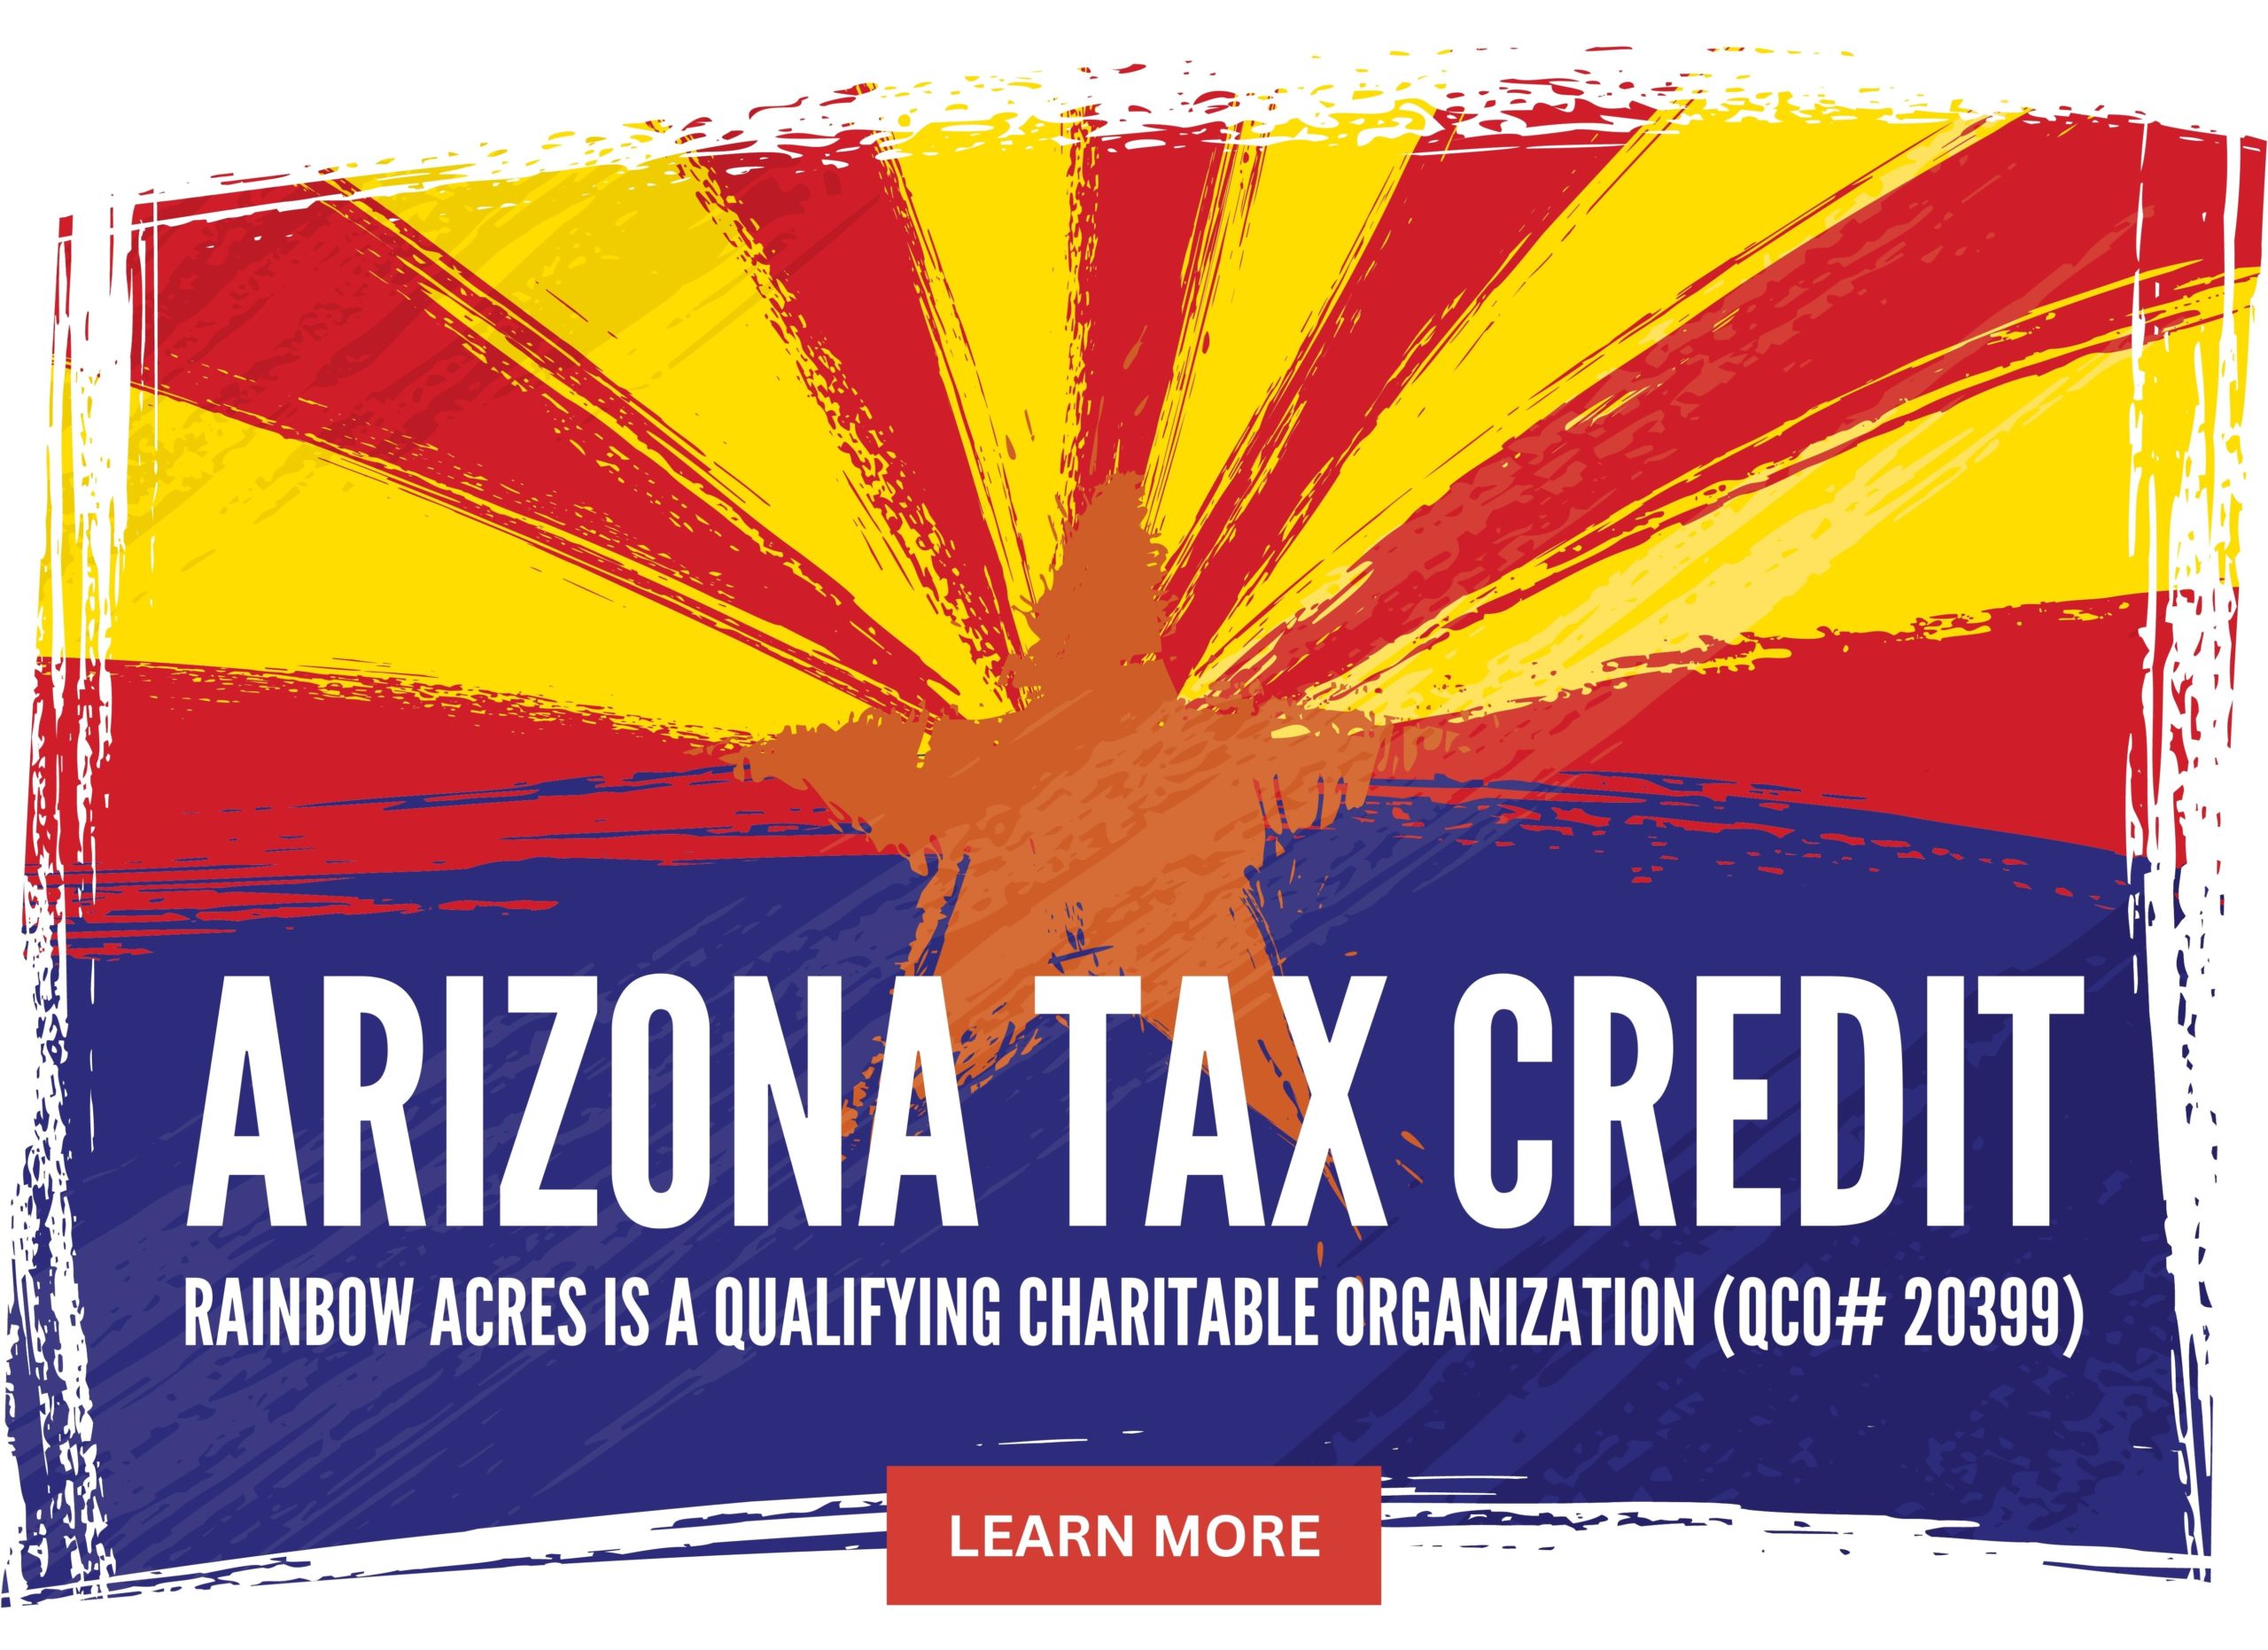 Arizona Tax Credit - RAINBOW ACRES IS A QUALIFYING CHARITABLE ORGANIZATION (QCO# 20399)